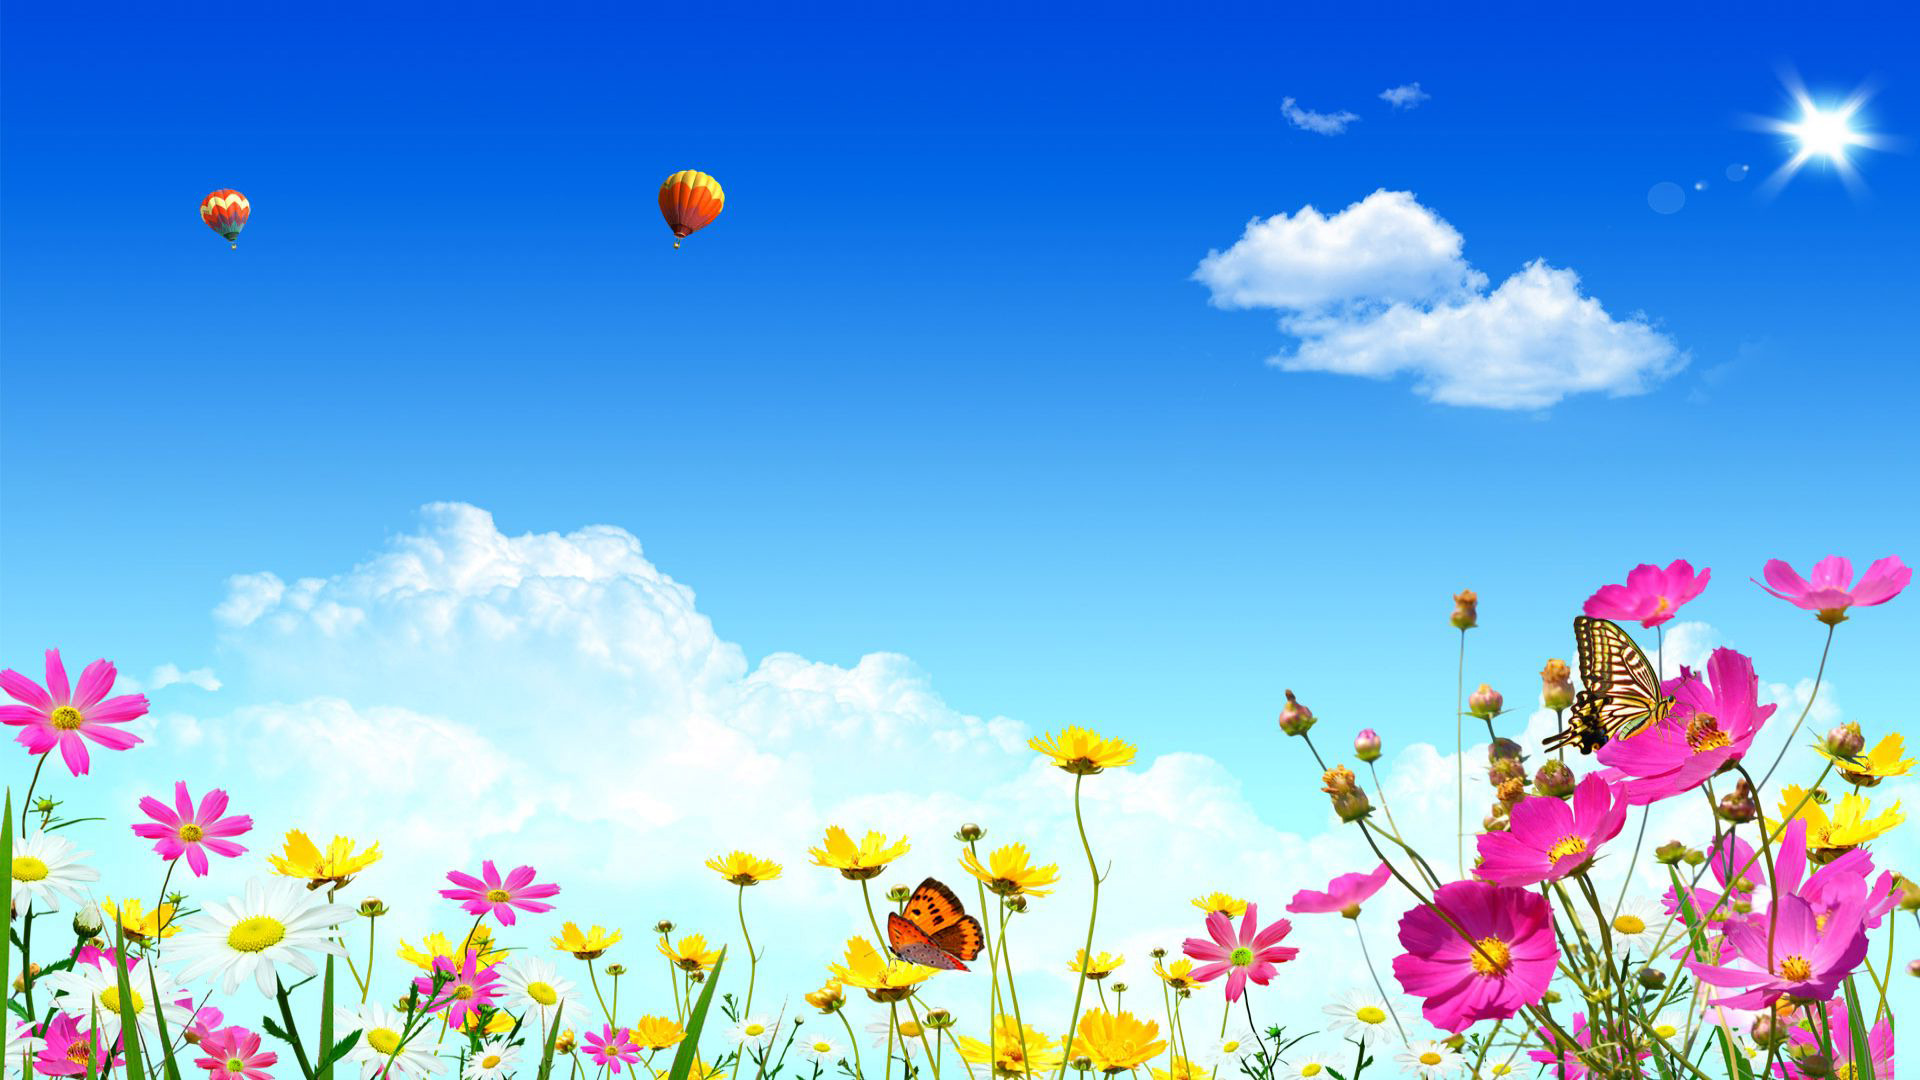 Hot air ballons over Cosmos flowers wallpaper   578255